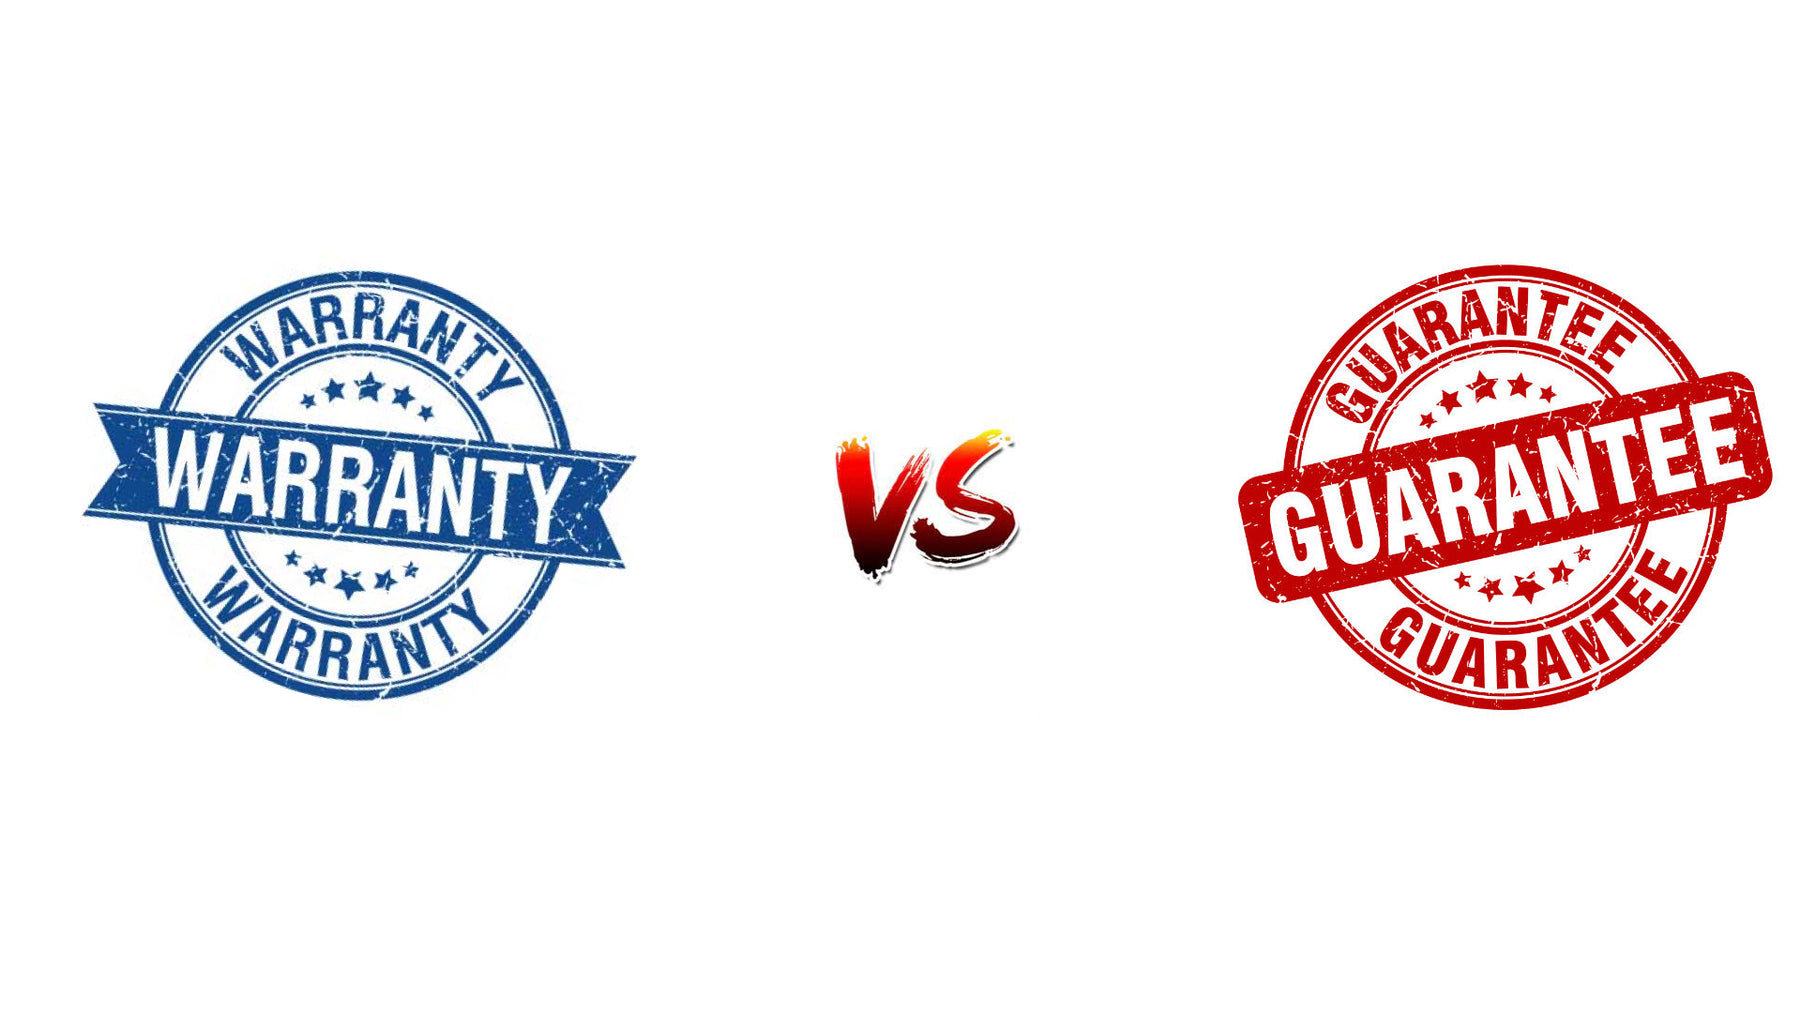 Warranty vs Guarantee